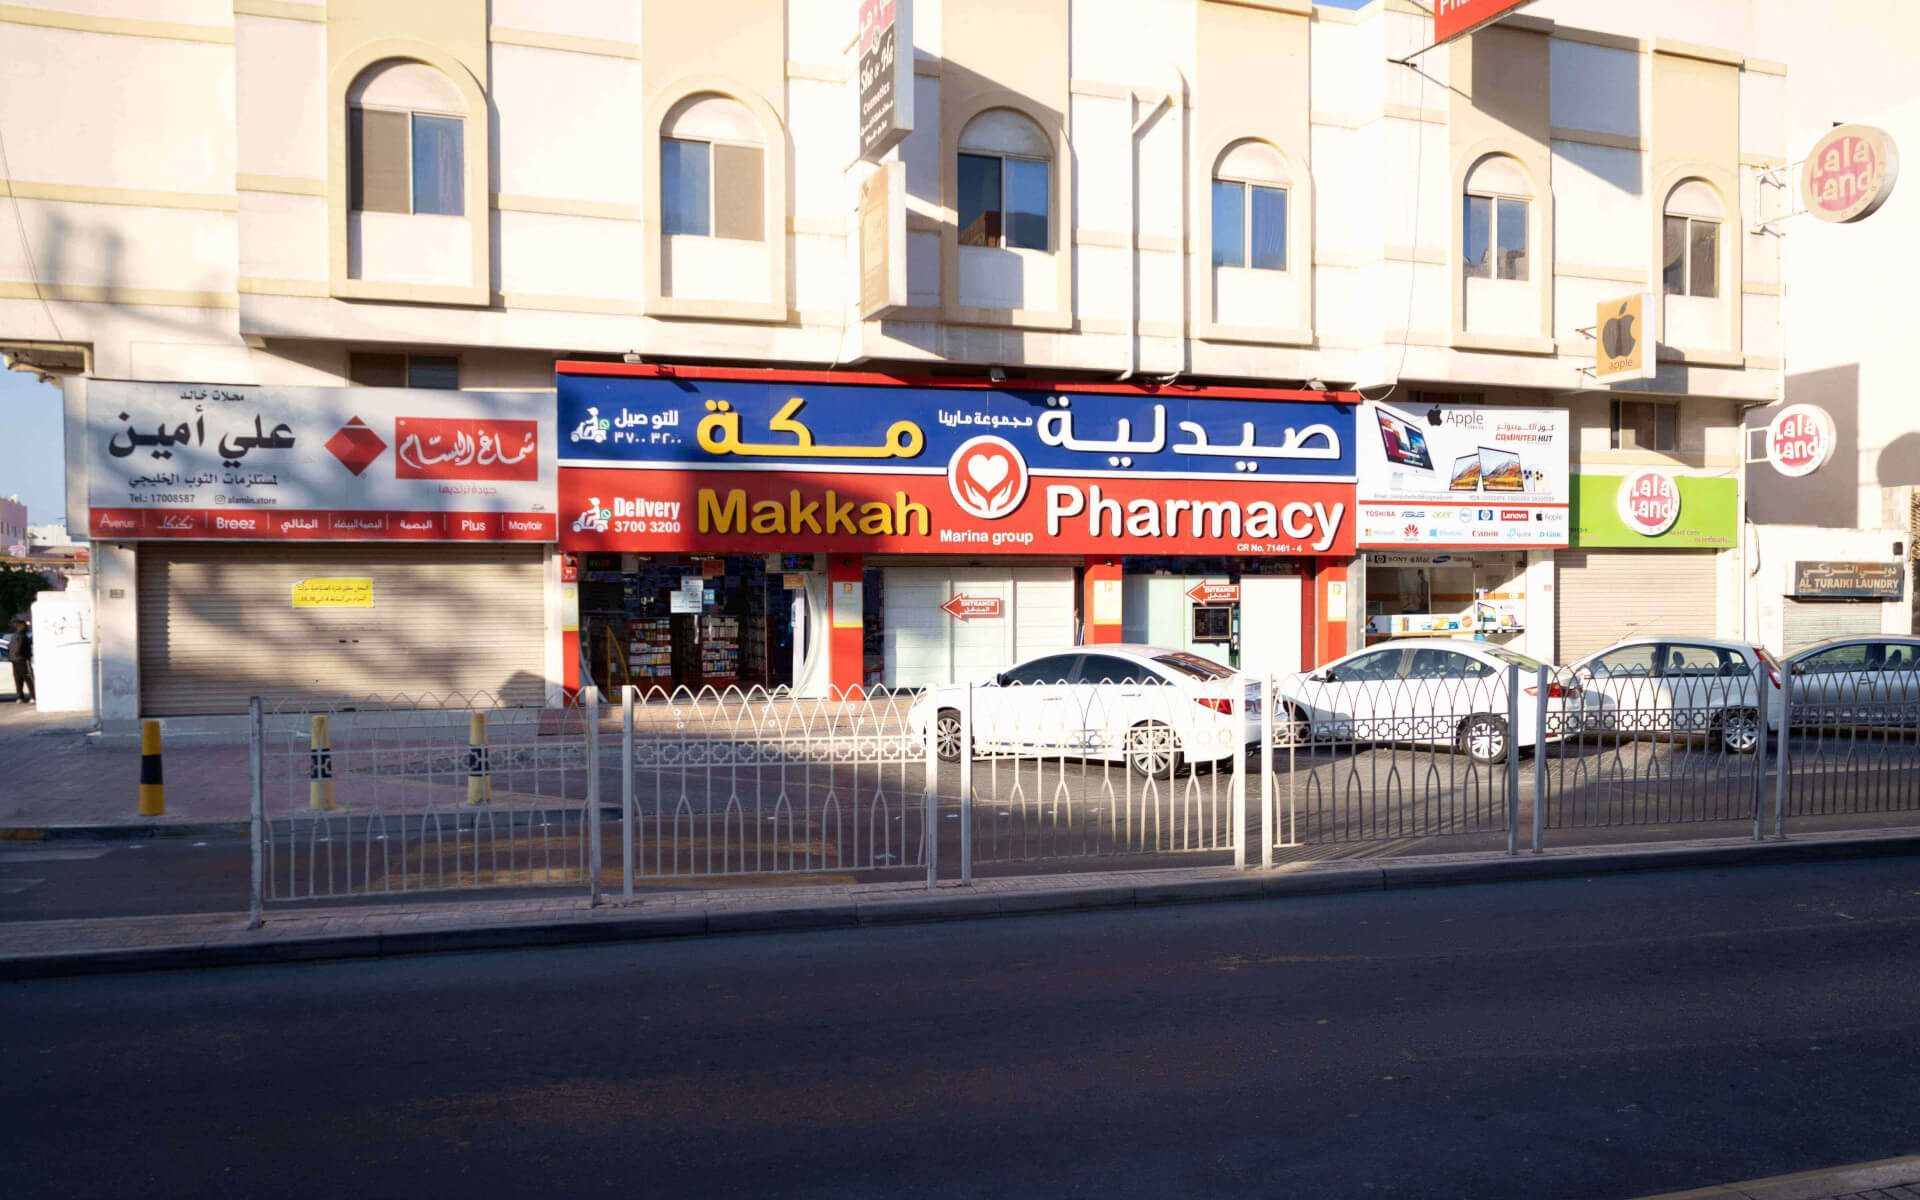 Makkah Pharmacy